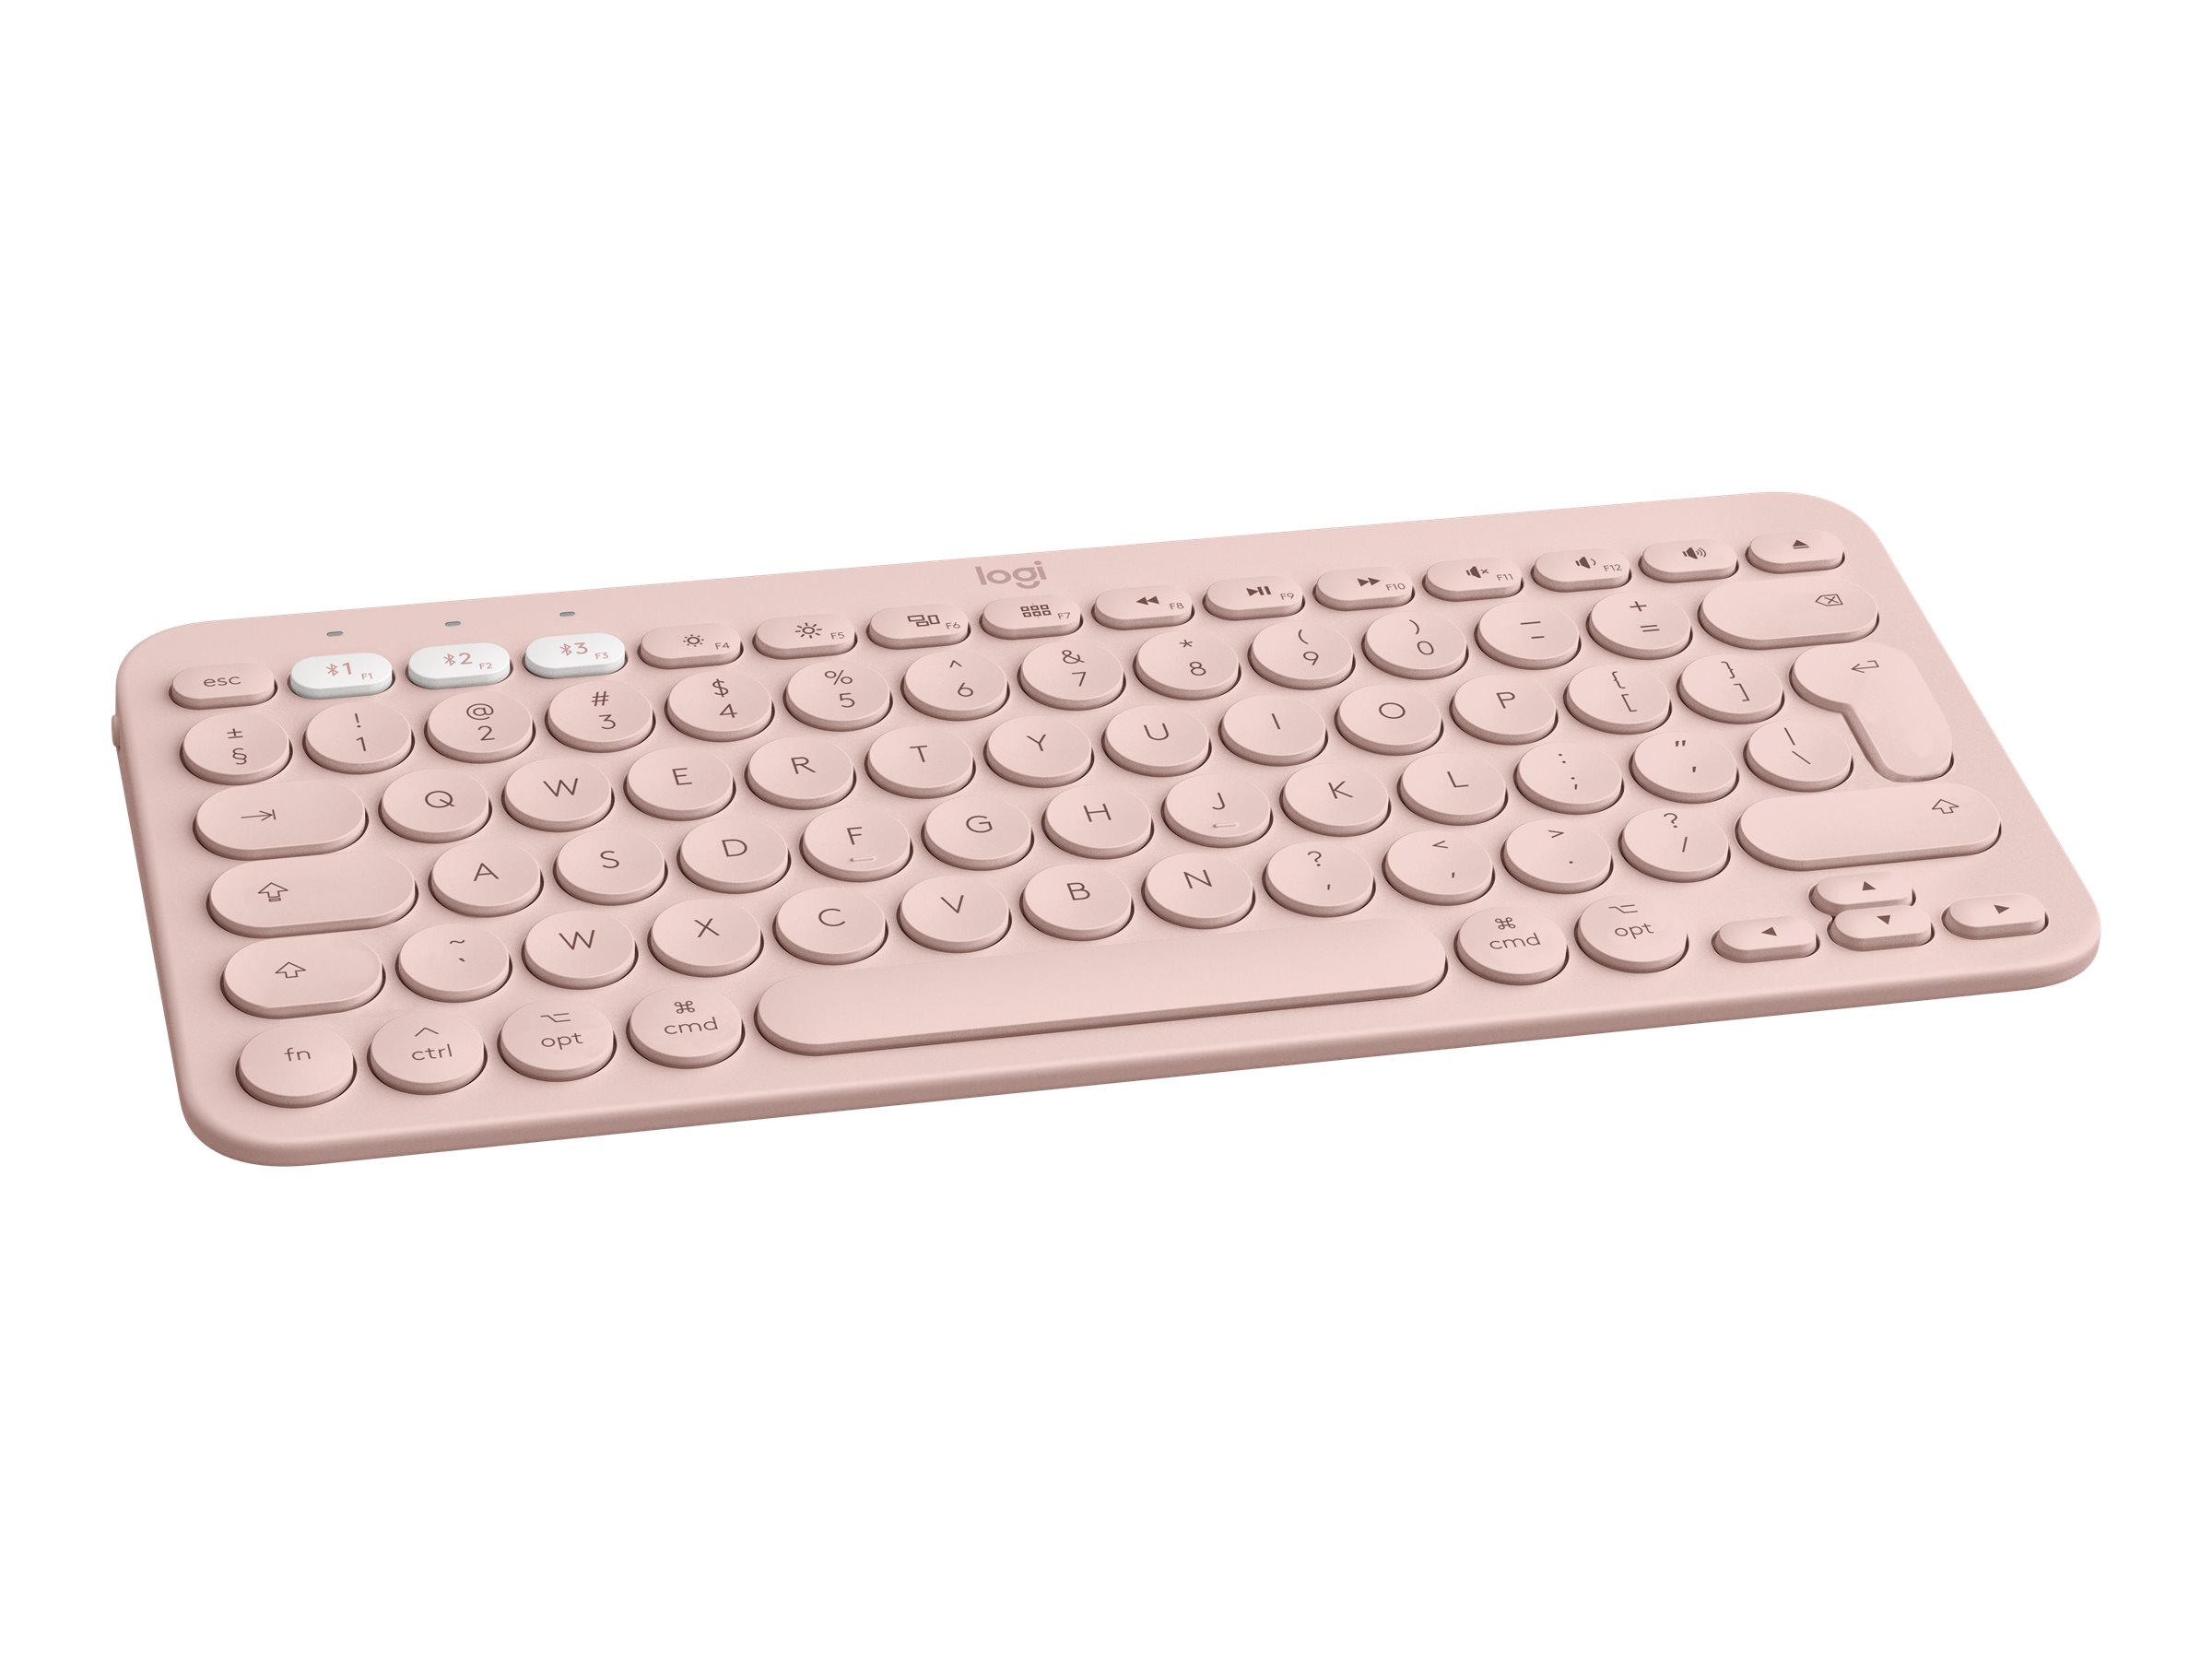 Logitech K380 Multi-Device Bluetooth Keyboard for Mac - Clavier - sans fil - Bluetooth 3.0 - AZERTY - Français - rose - 920-010394 - Claviers